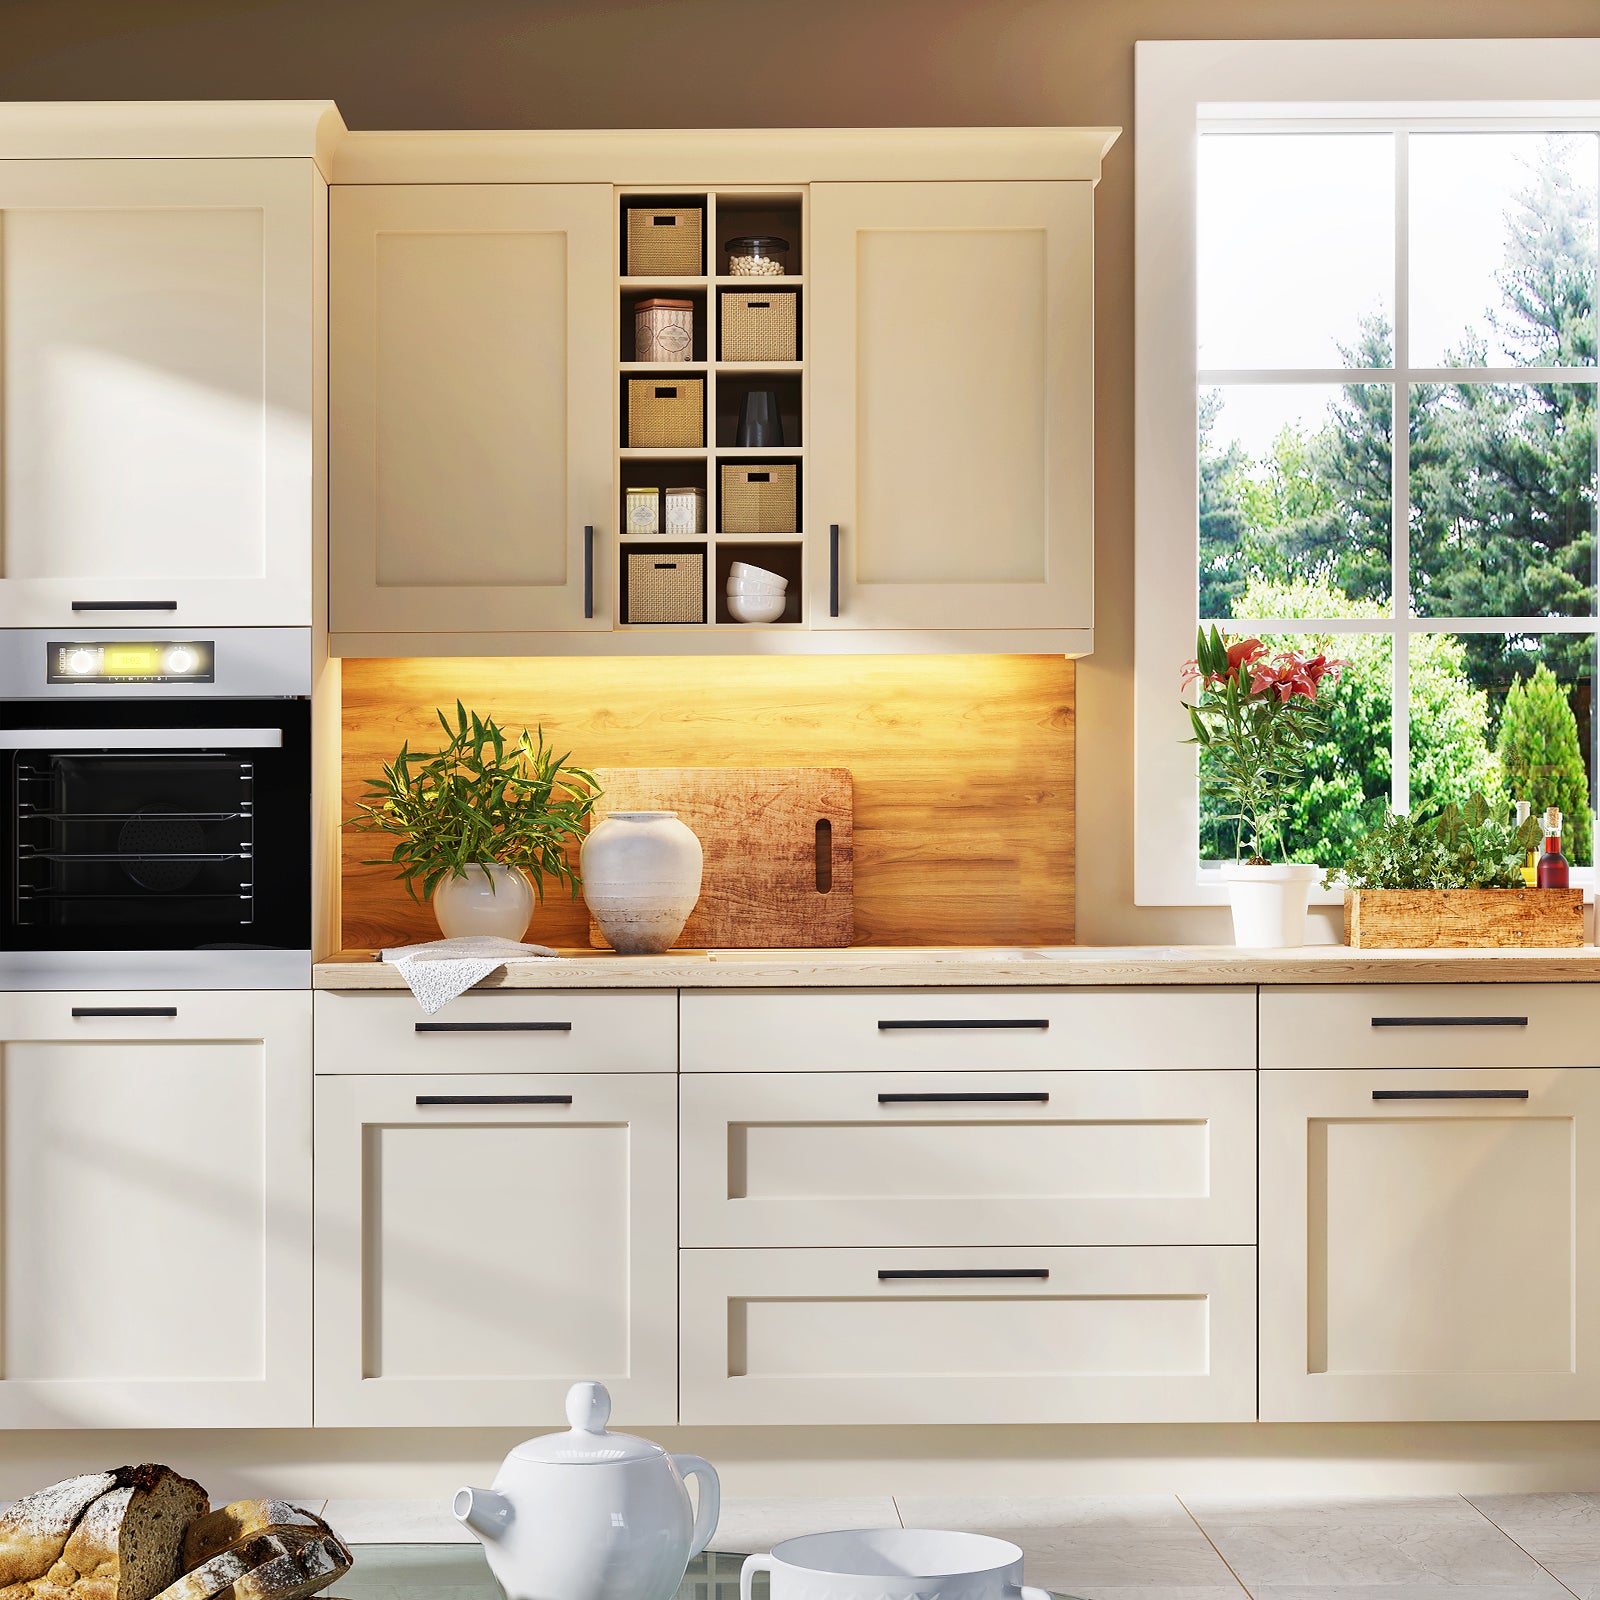 Ravinte Kitchen Square Cabinet Handles Cabinet Pulls Drawer Pulls Kitchen Cabinet Hardware Kitchen Handles